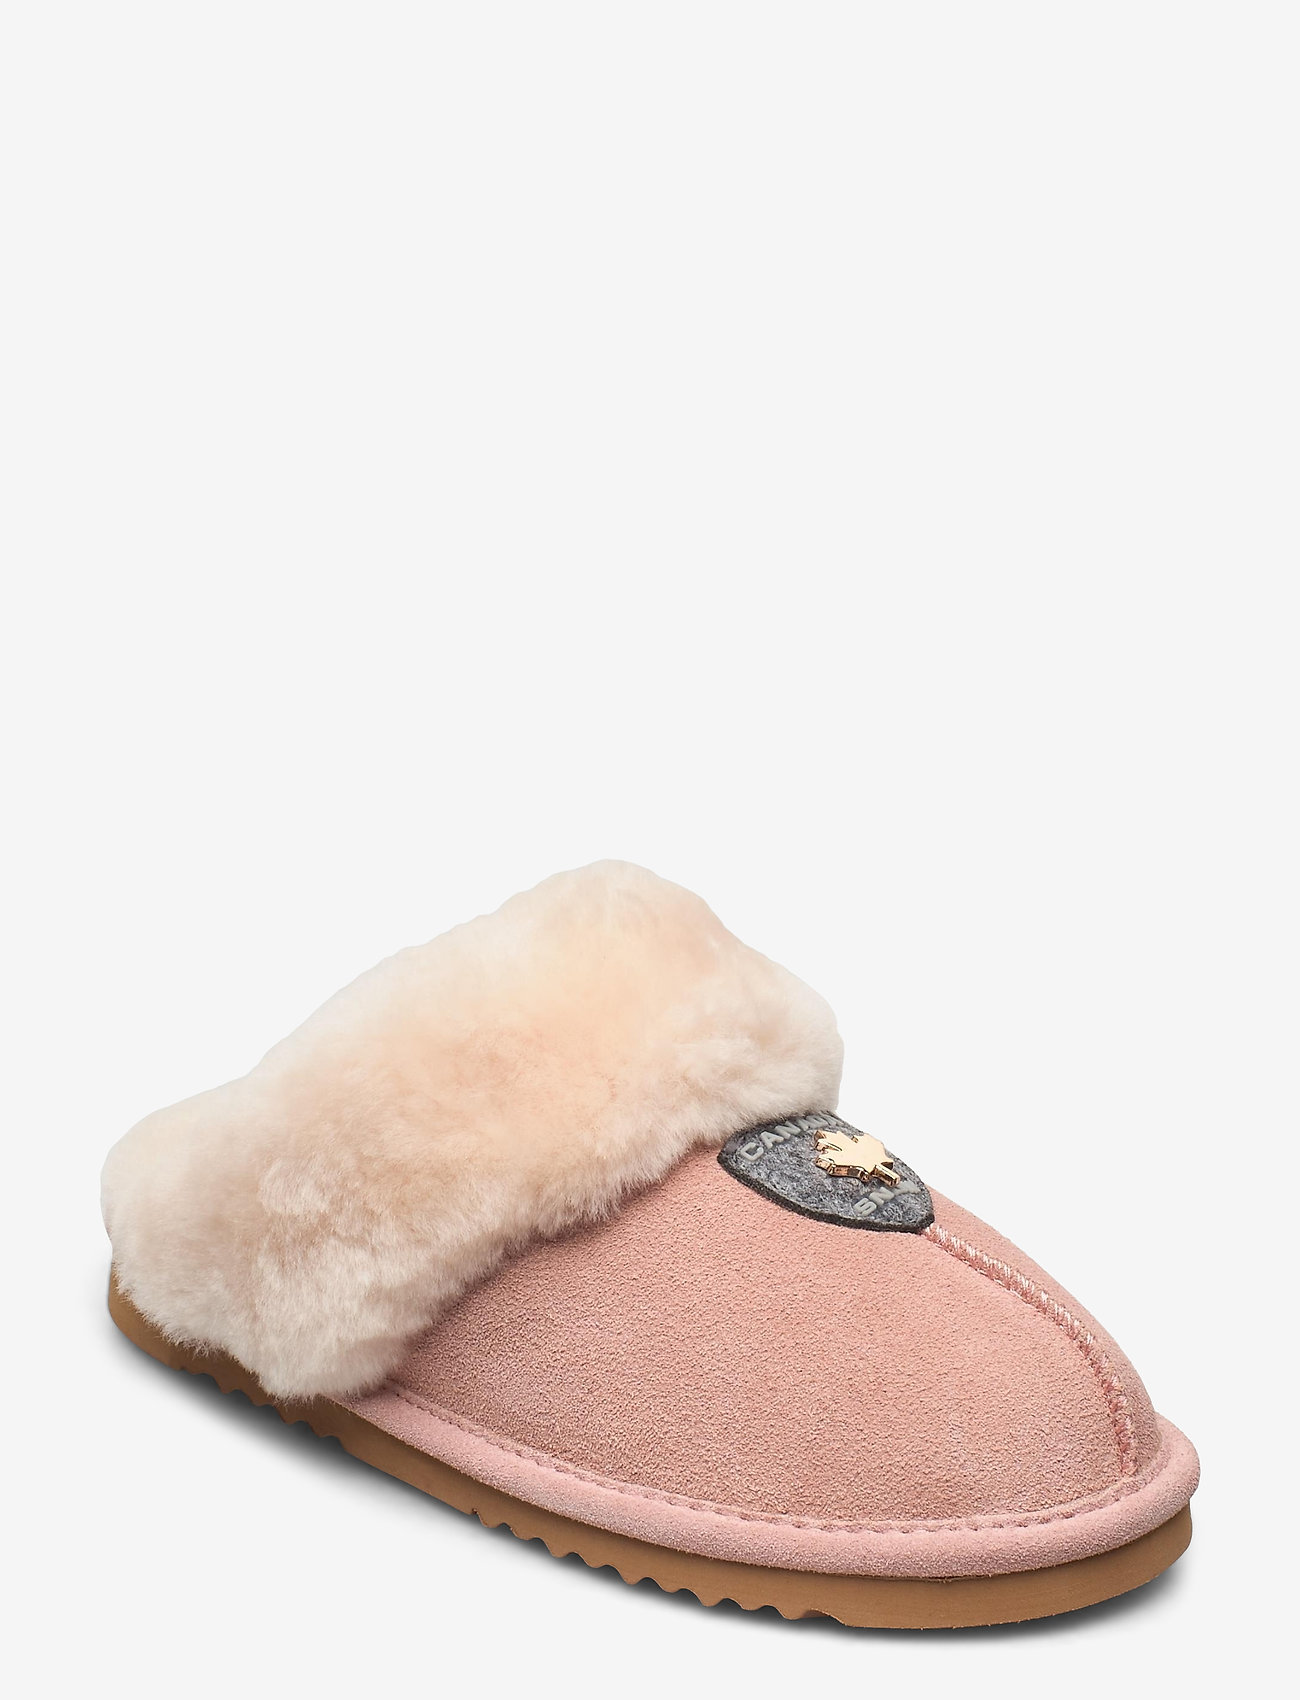 sheepskin slippers edmonton